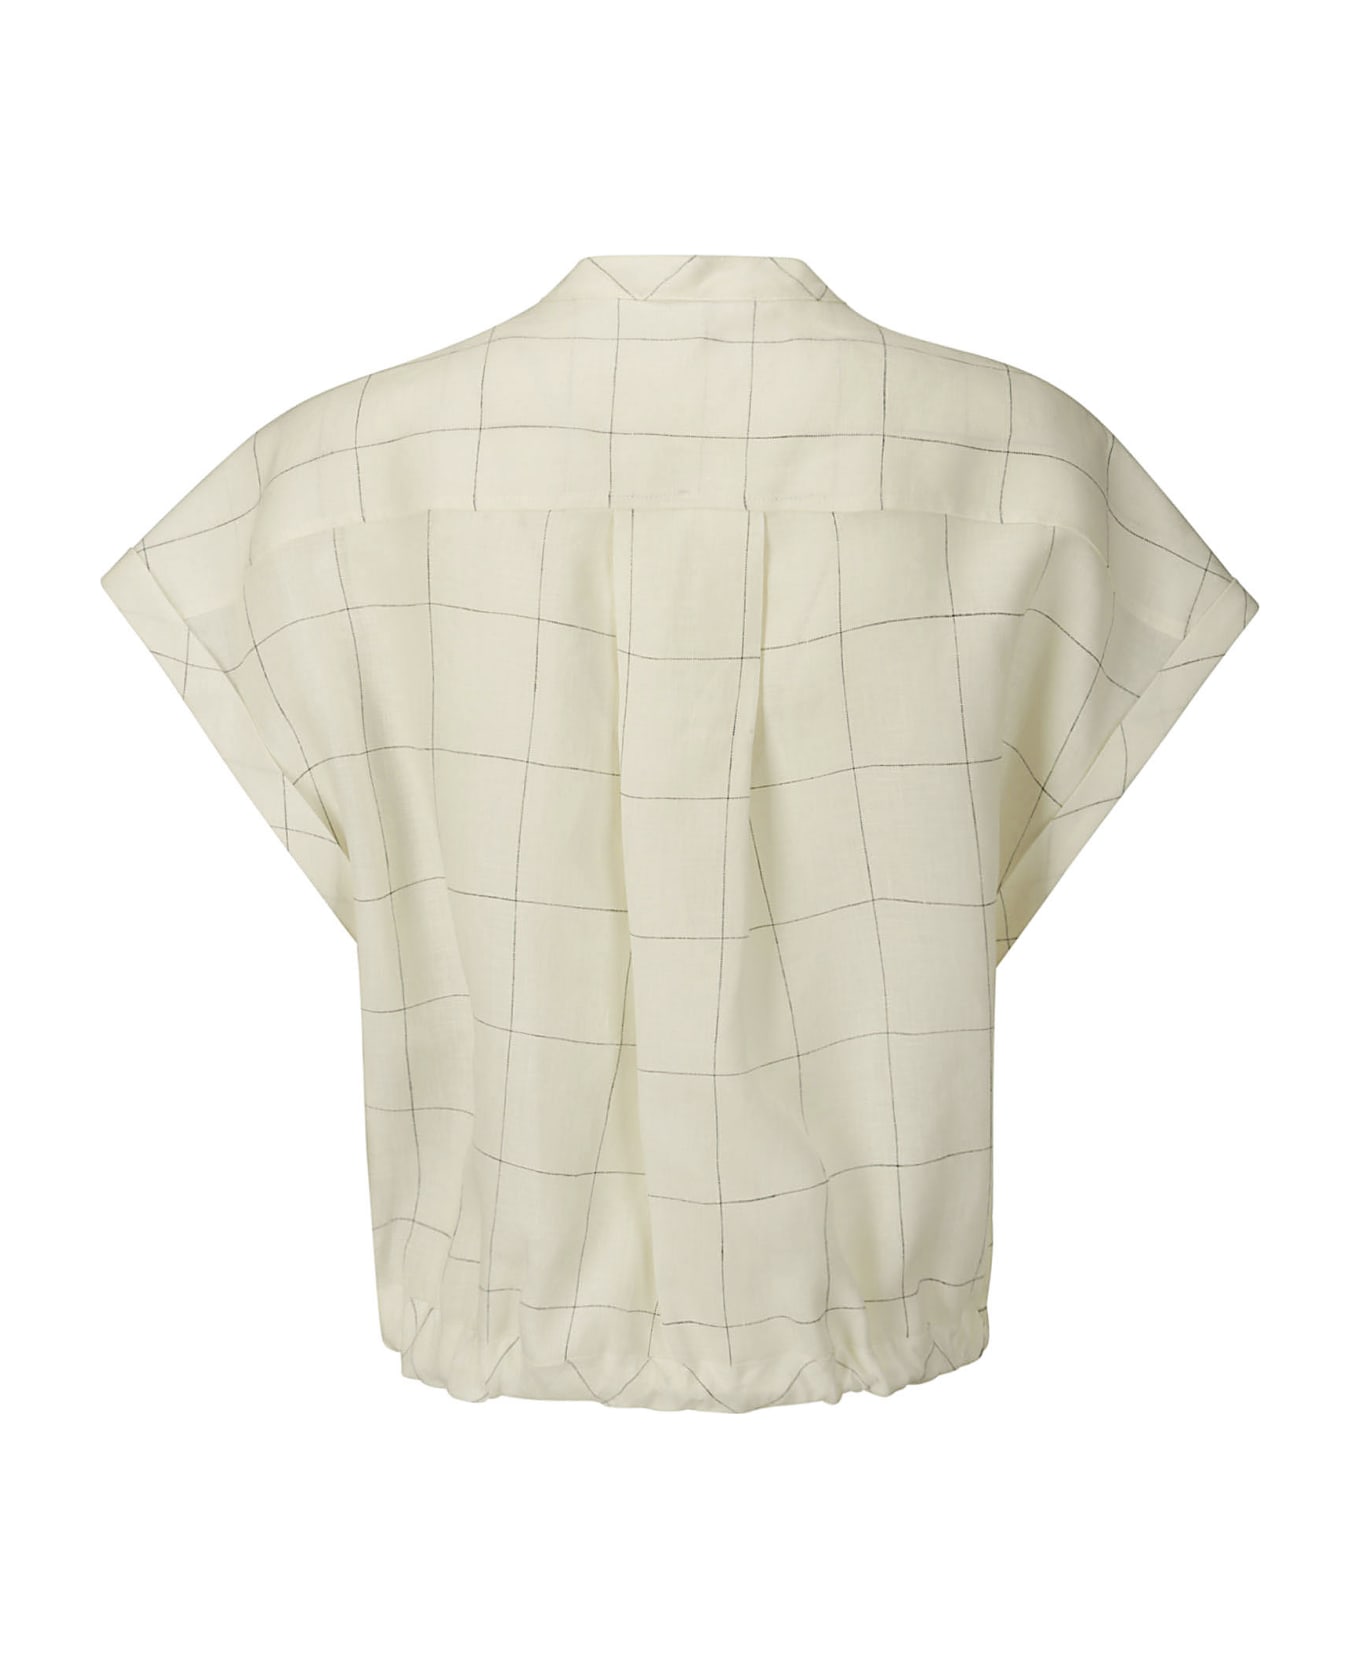 Stefano Mortari M/s Windowed Linen Shirt - CREAM WITH BLACK LINES